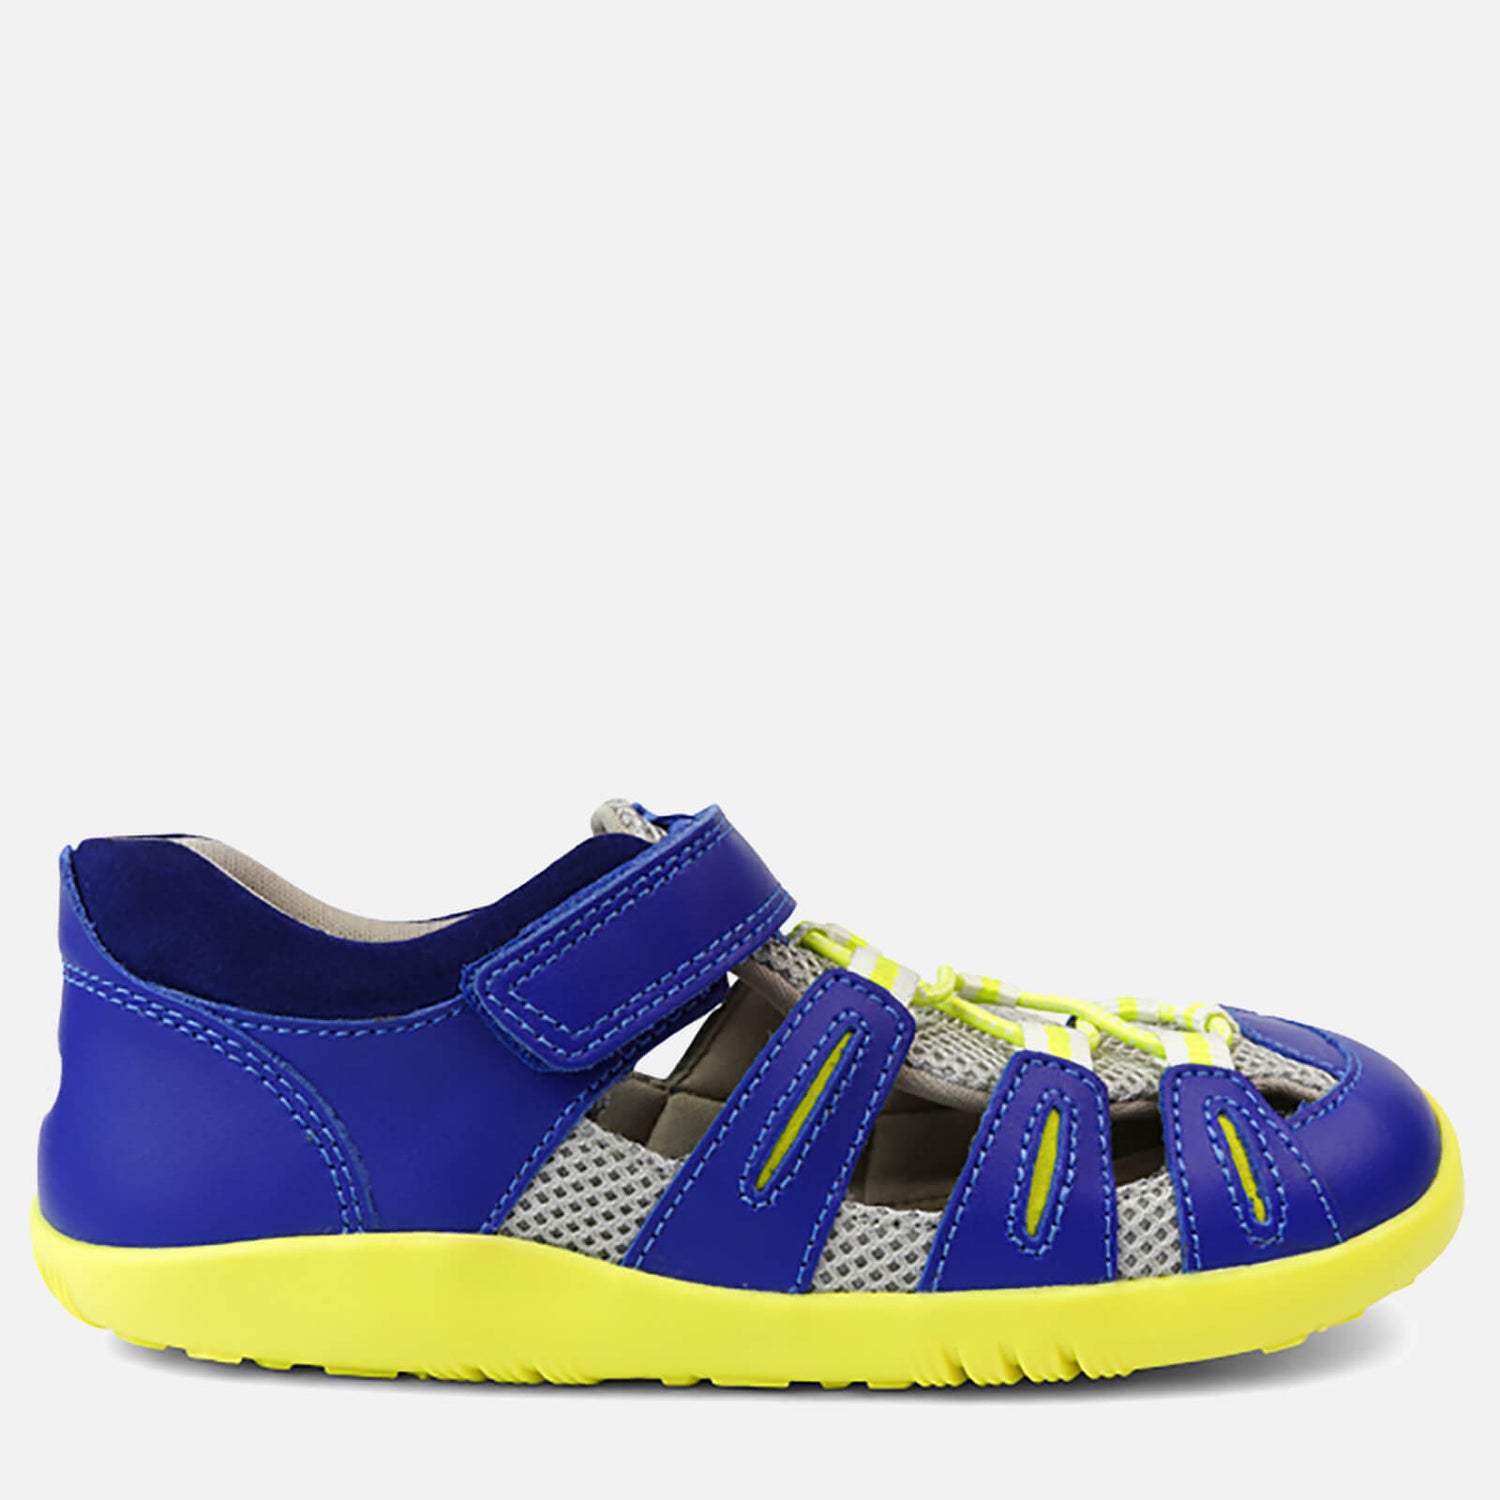 Bobux Boys' Kid's Plus Summit Water Shoes - Blueberry Neon - UK 9.5 Kids